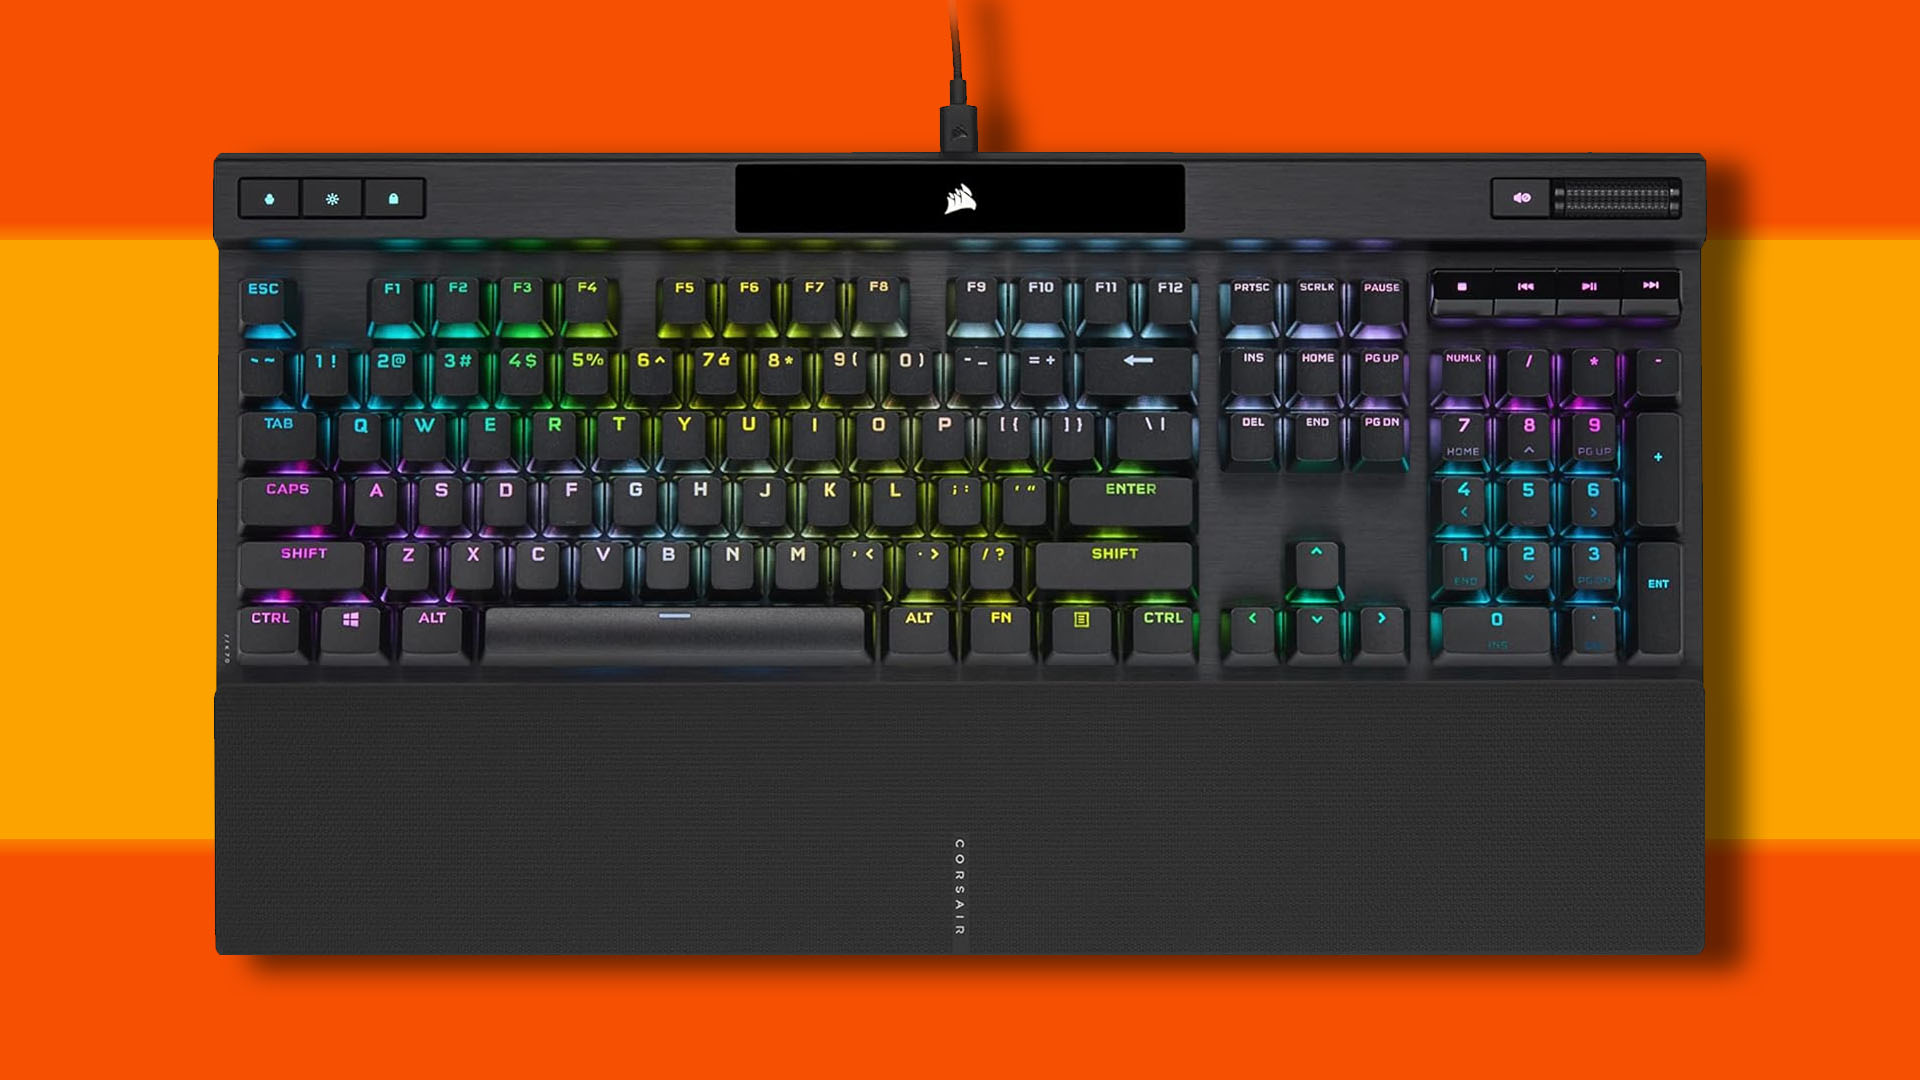 Save $70 in this amazing Corsair K70 RGB Pro gaming keyboard deal